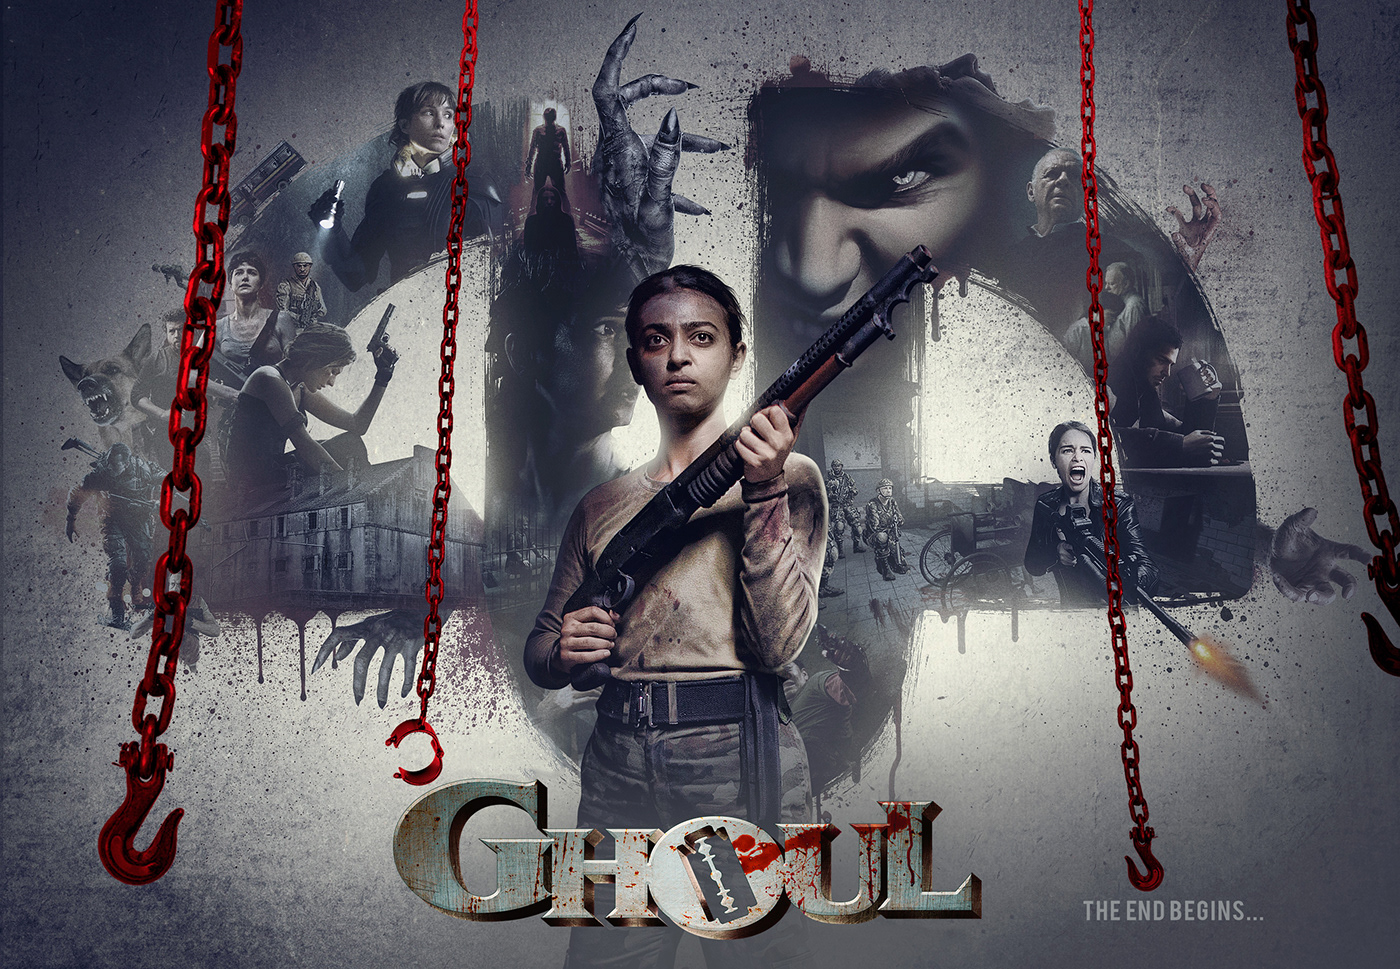 ghoul horror Radhika Apte scared games Netflix web series tv series poster slasher movie gore